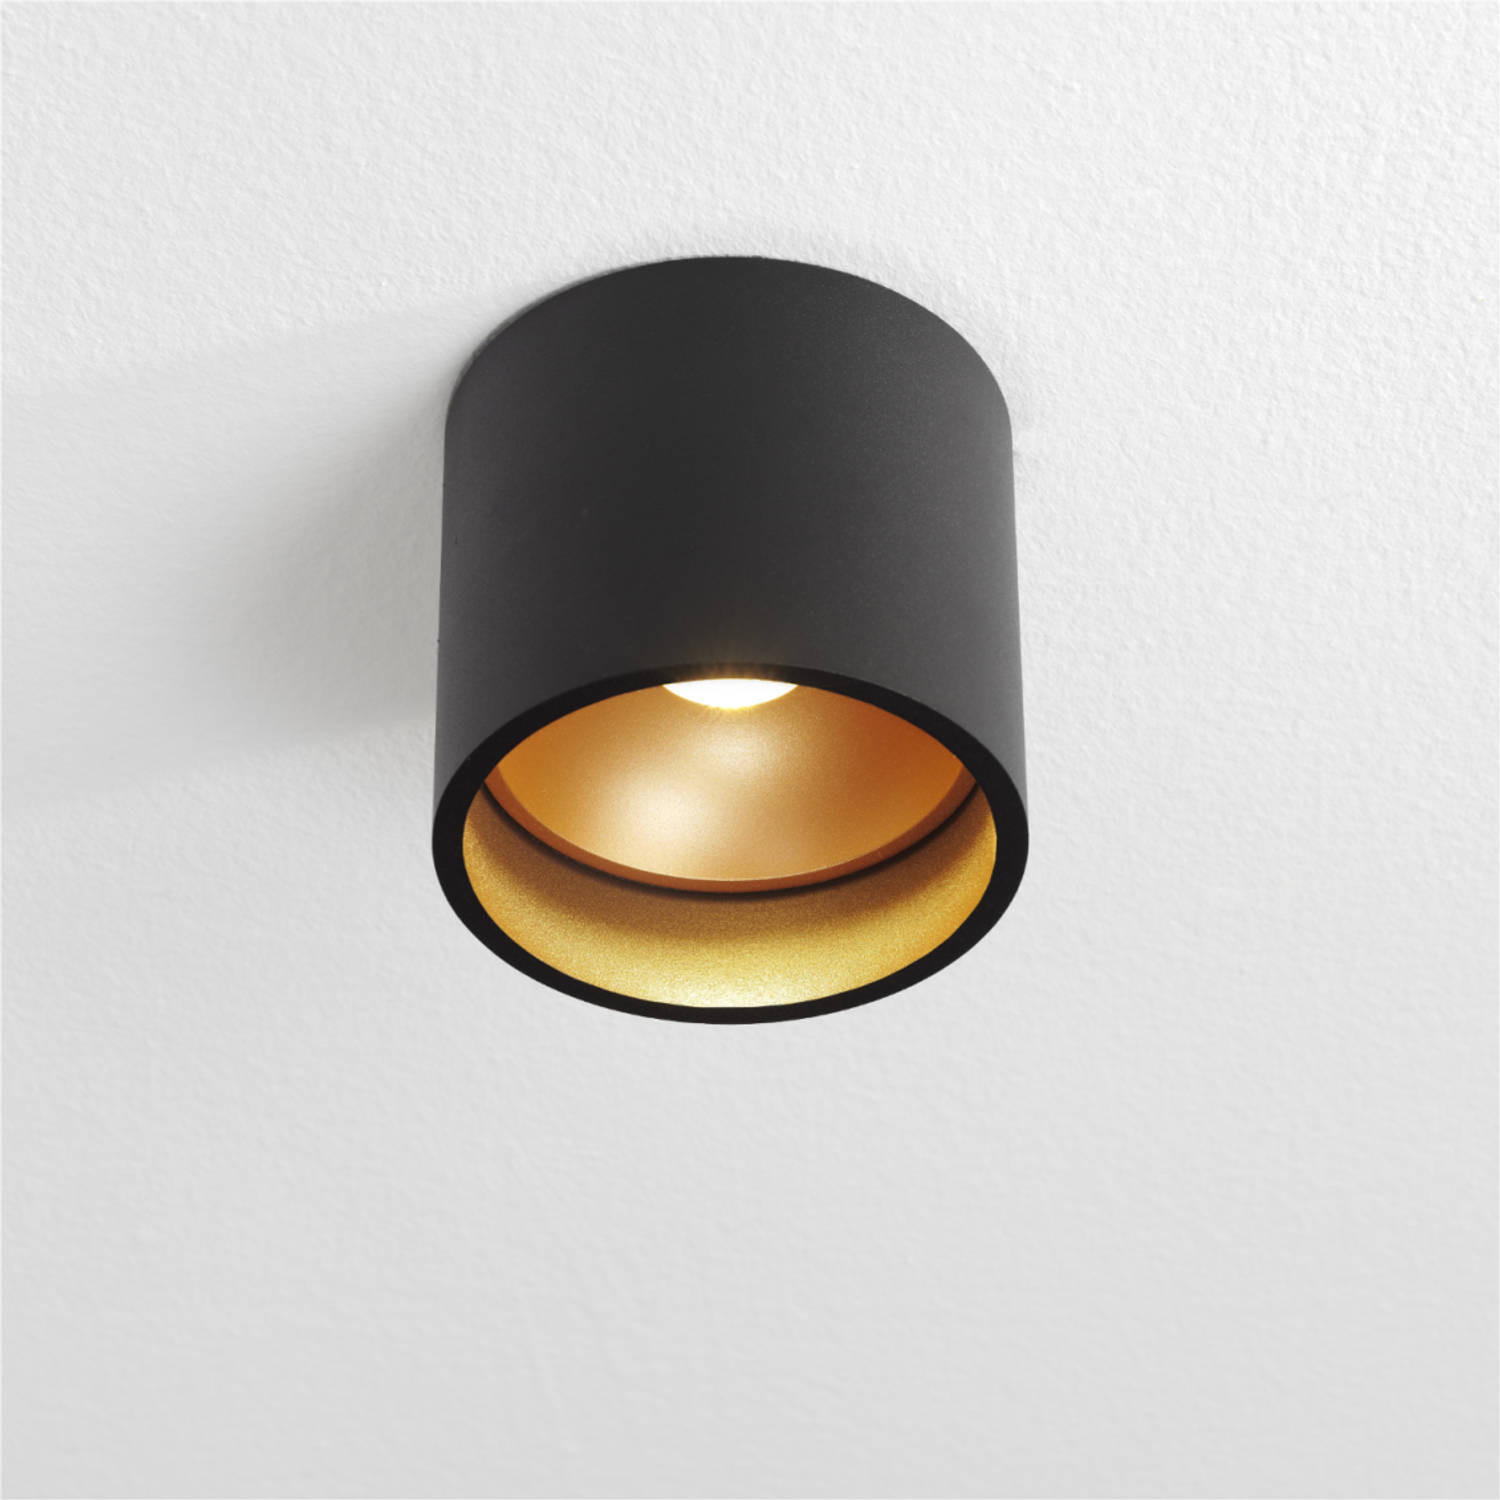 Artdelight Plafondlamp Orleans Ø 11 cm H 10 cm zwart-goud